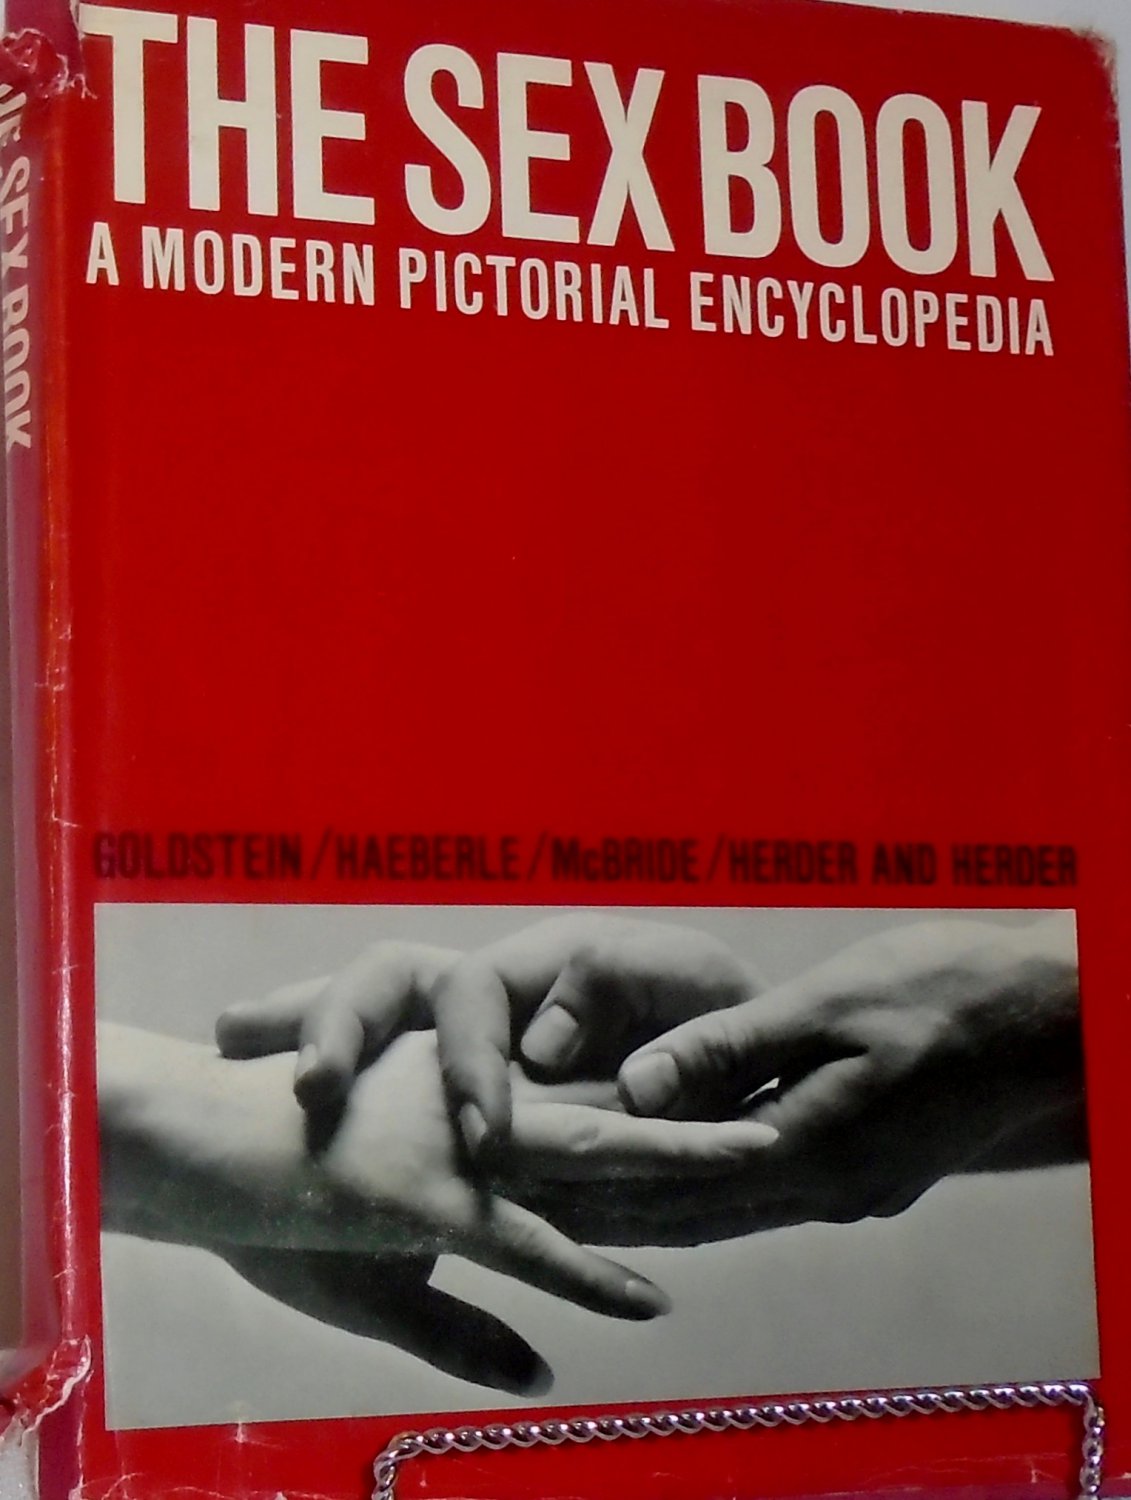 The Sex Book A Modern Pictorial Encyclopedia